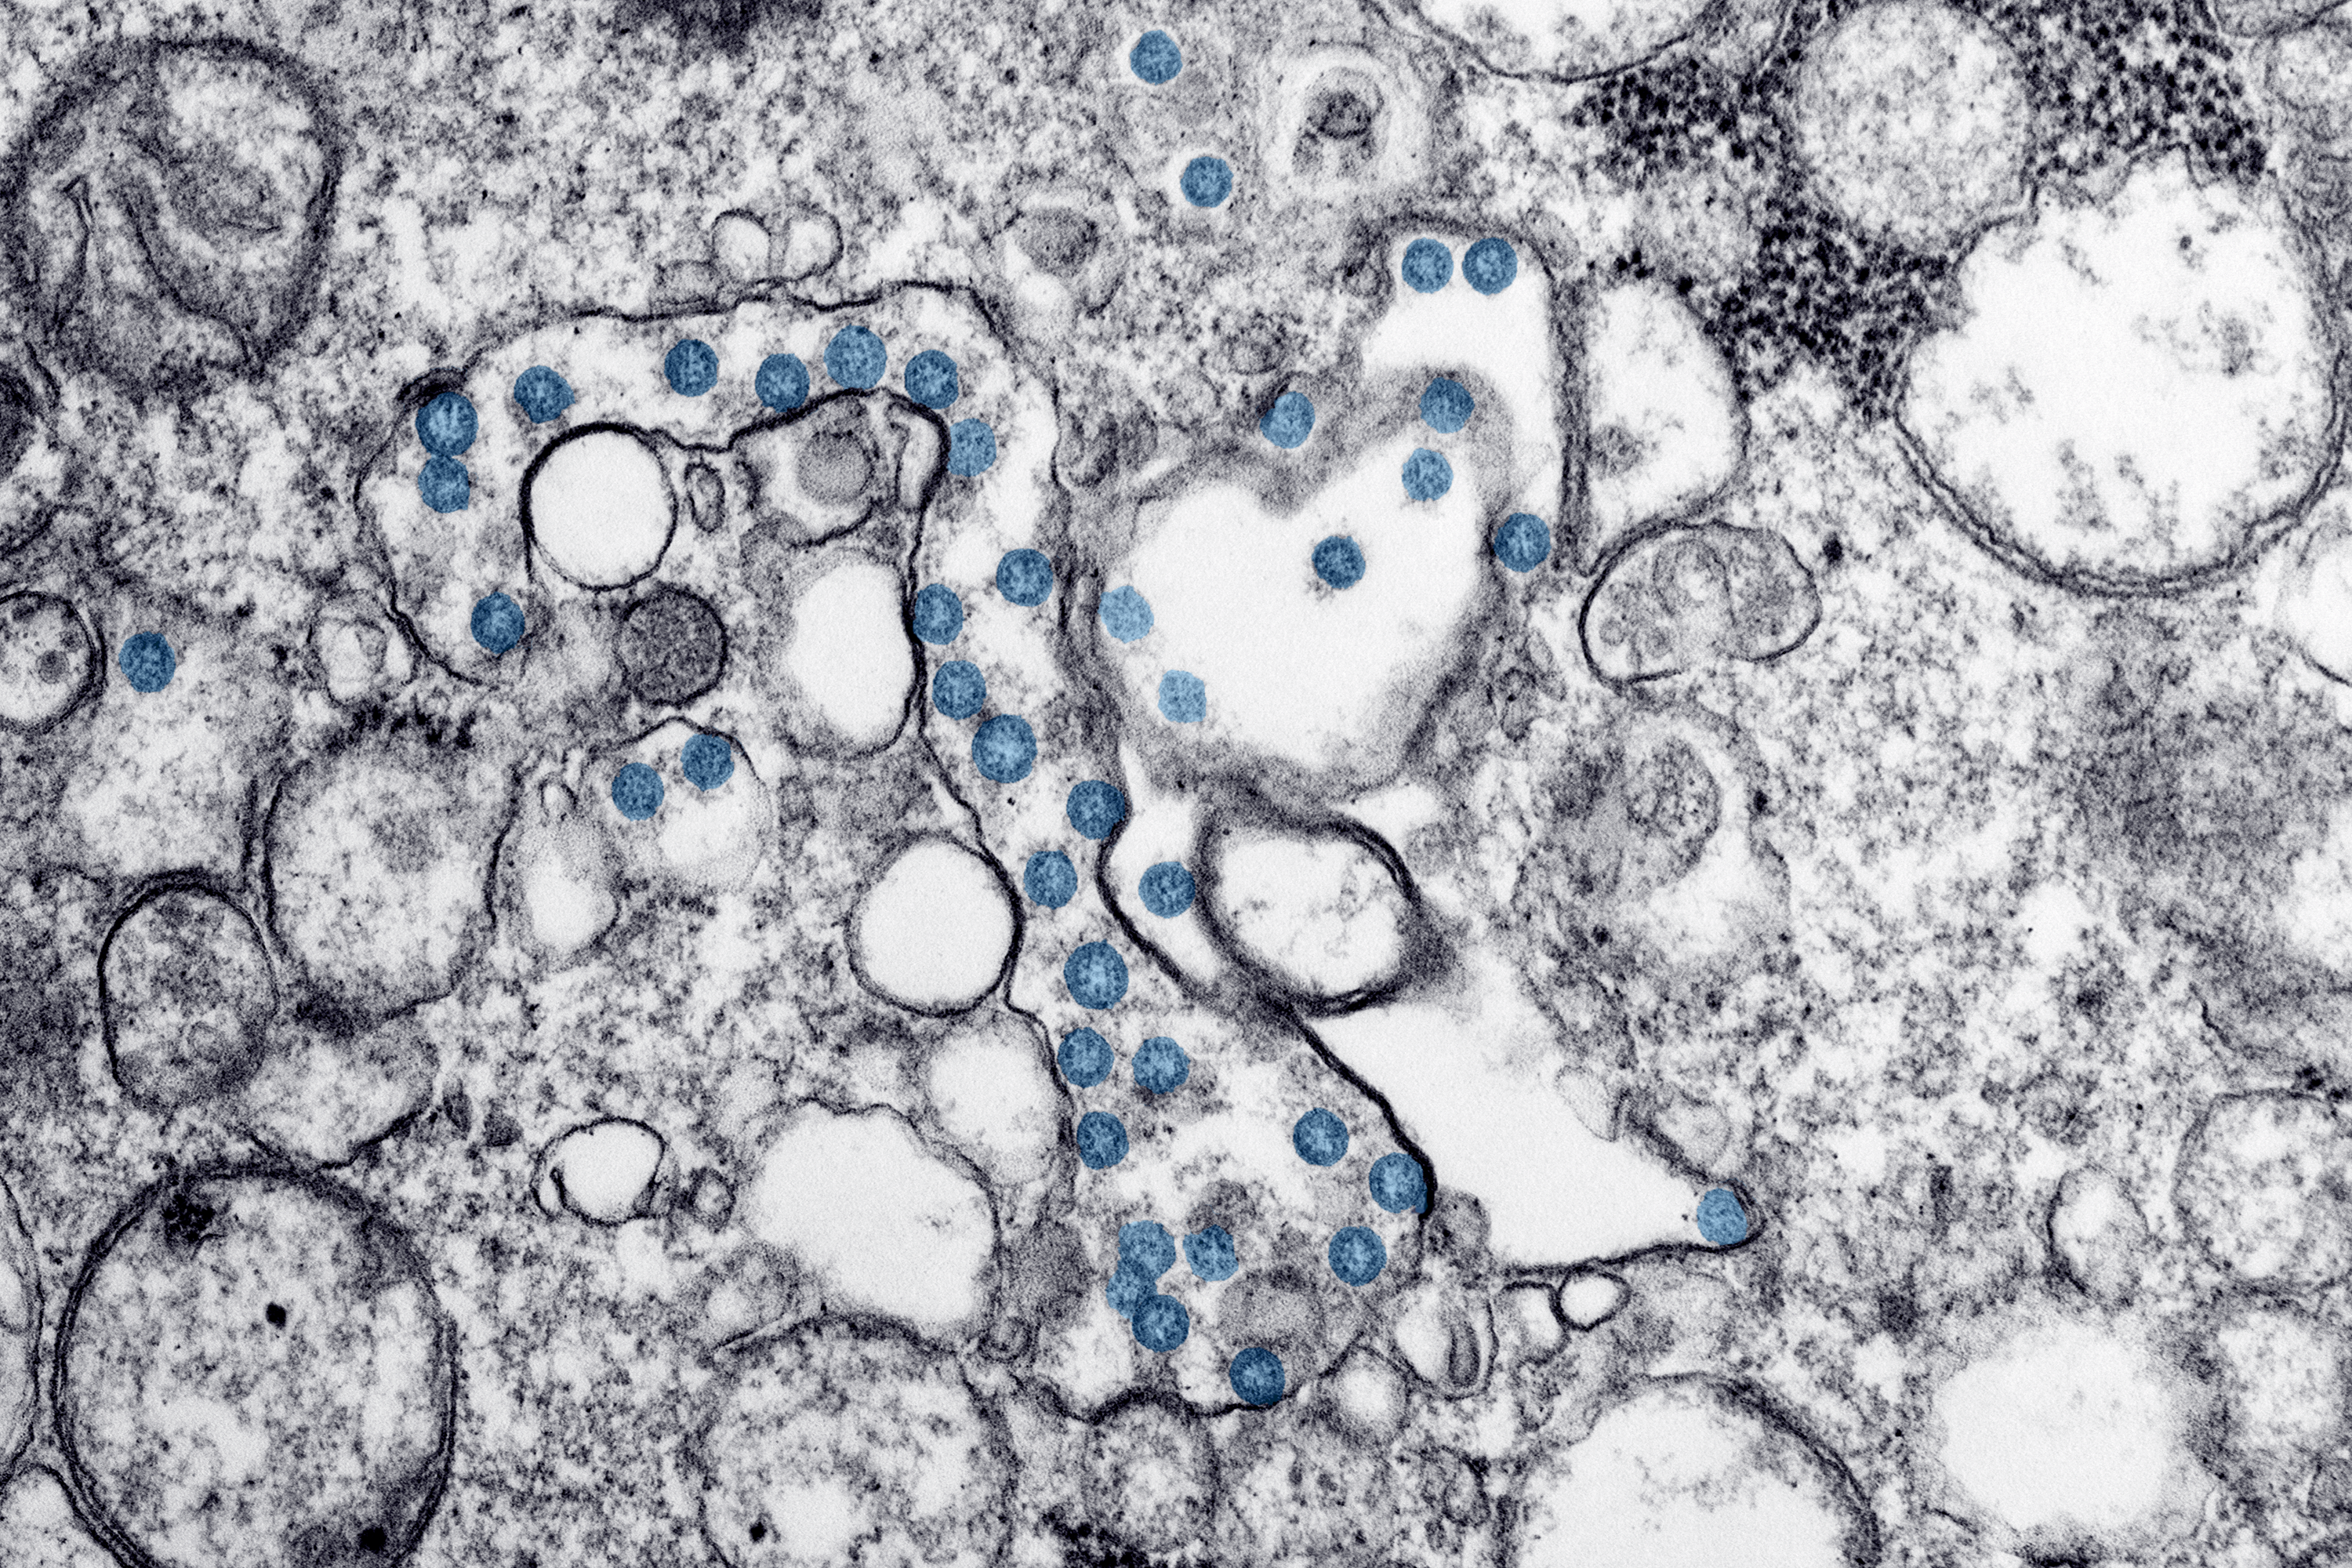 Image of the microscopic virus